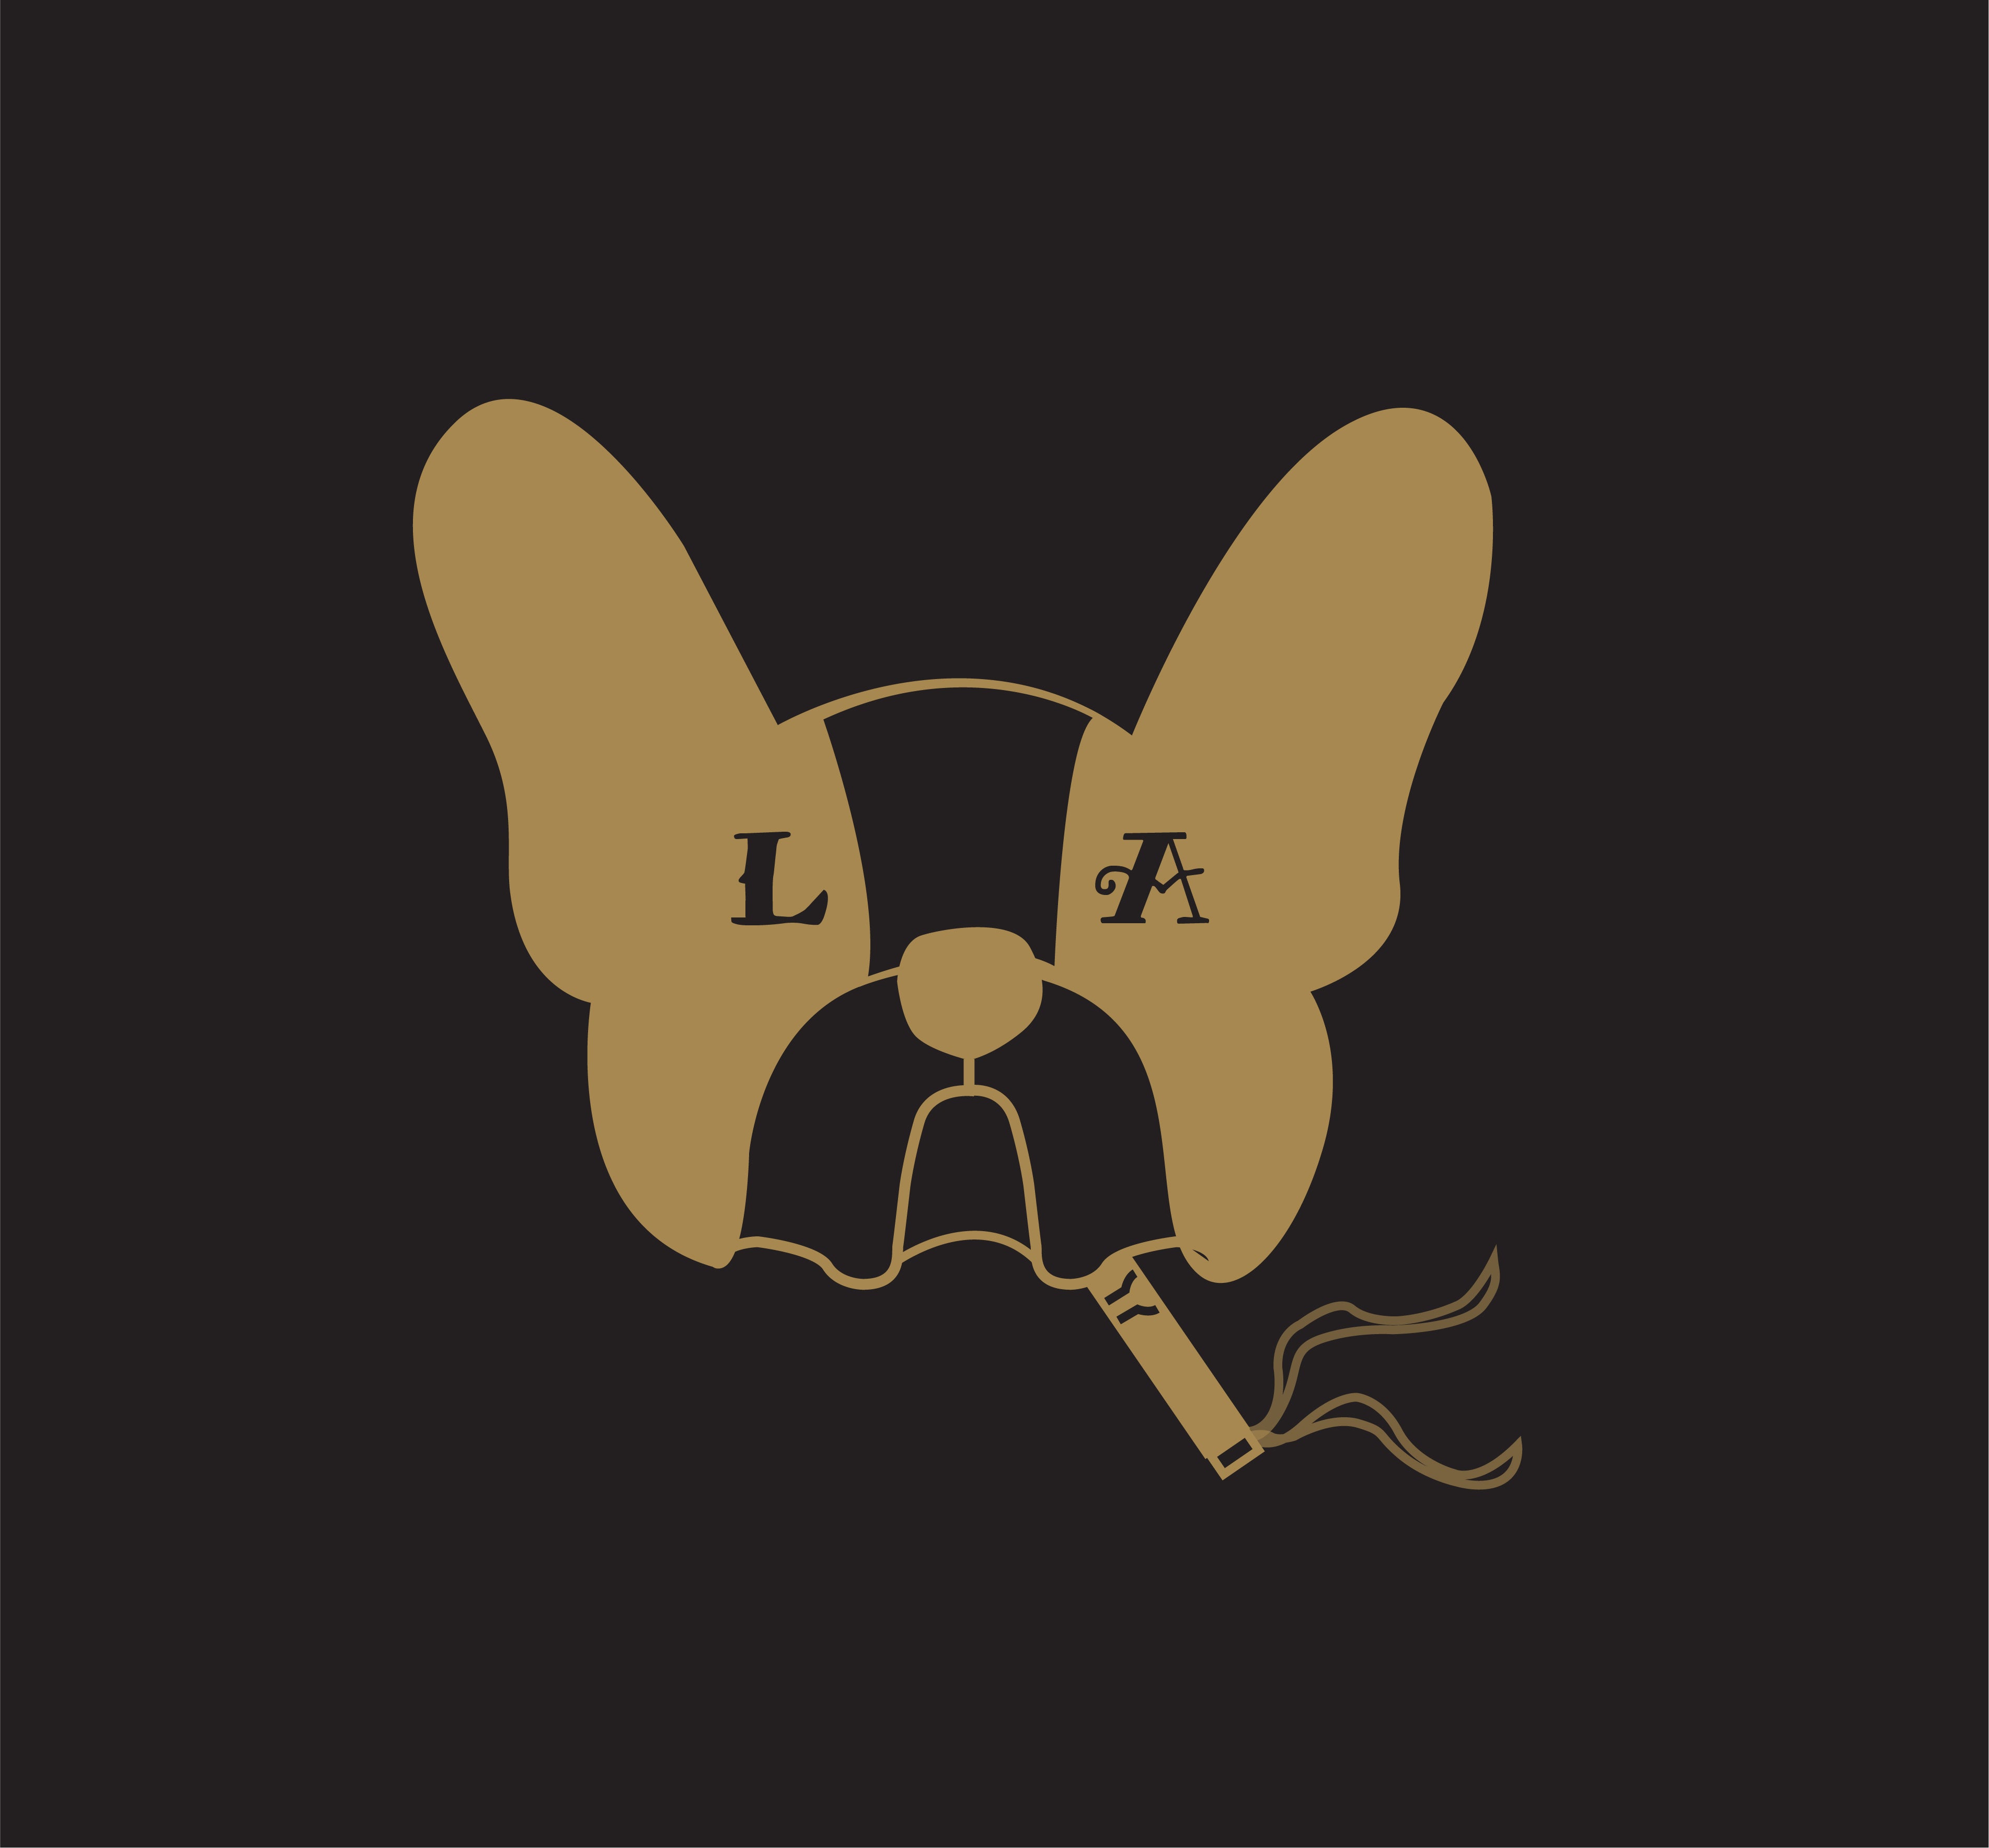 La Aficionados logo of gold boston terrier silhouette with L and A as eyes smoking a cigar